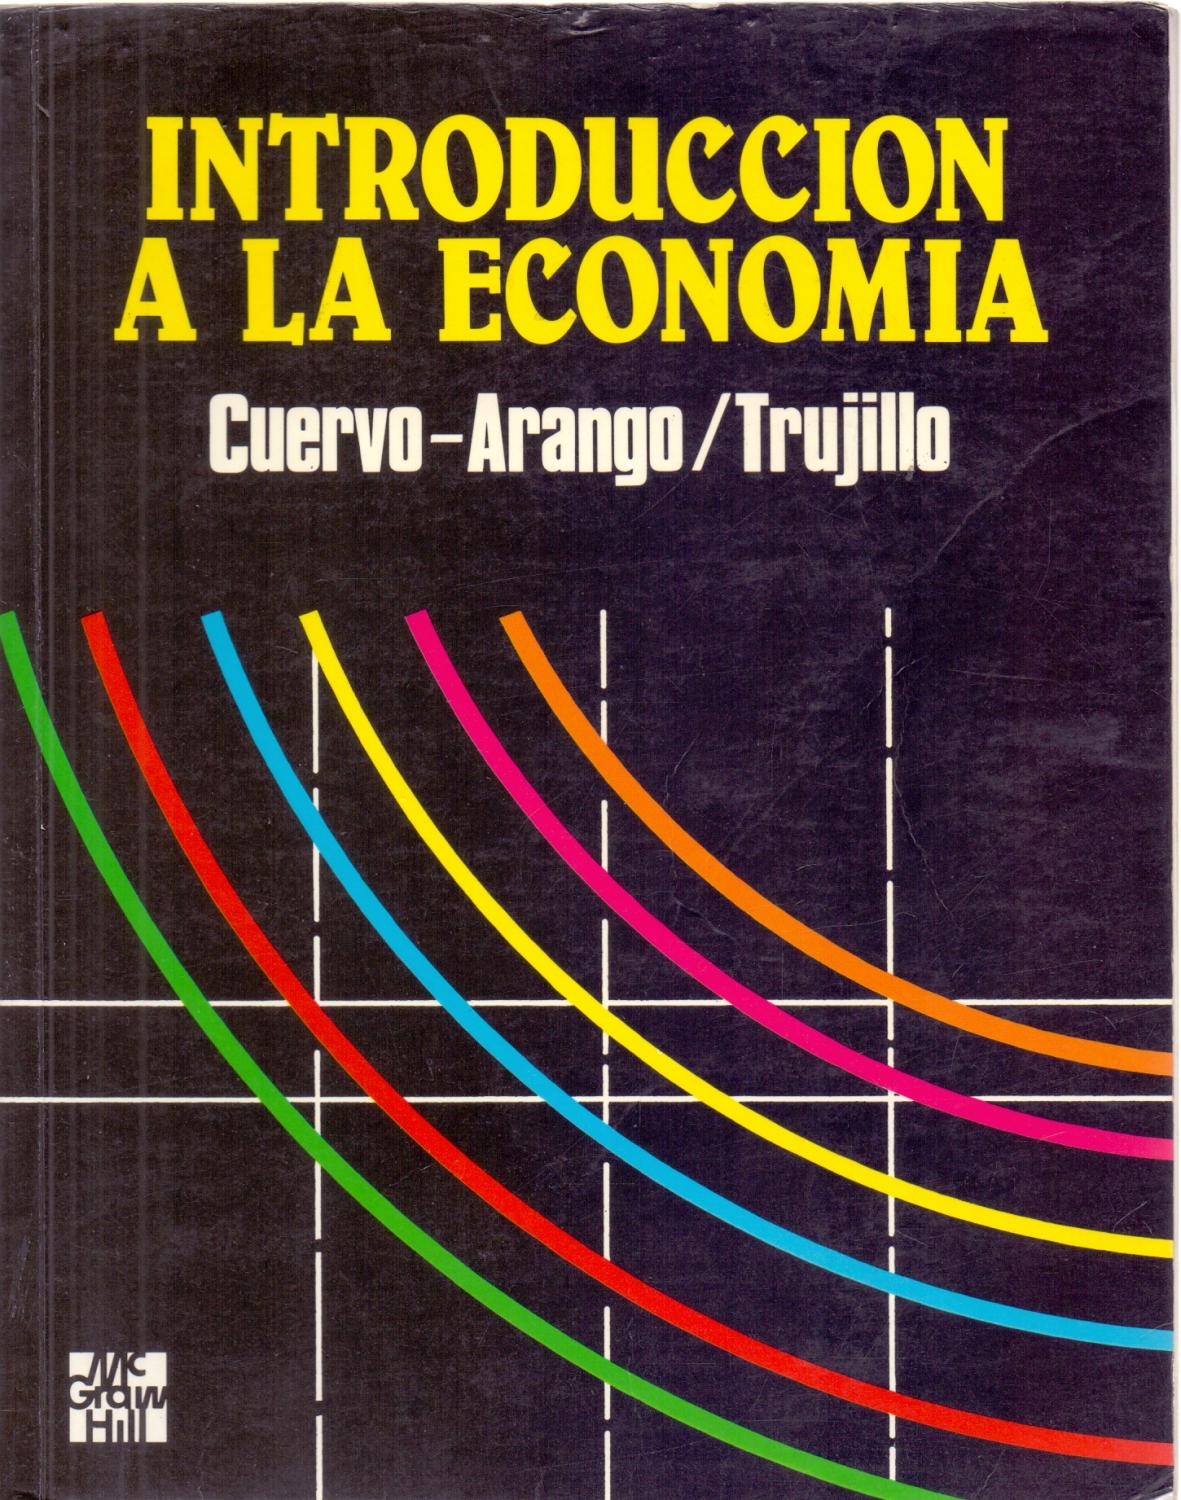 INTRODUCCION A LA ECONOMIA - Carlos Cuervo-Arango Martinez / Jose A. Trujillo del Valle